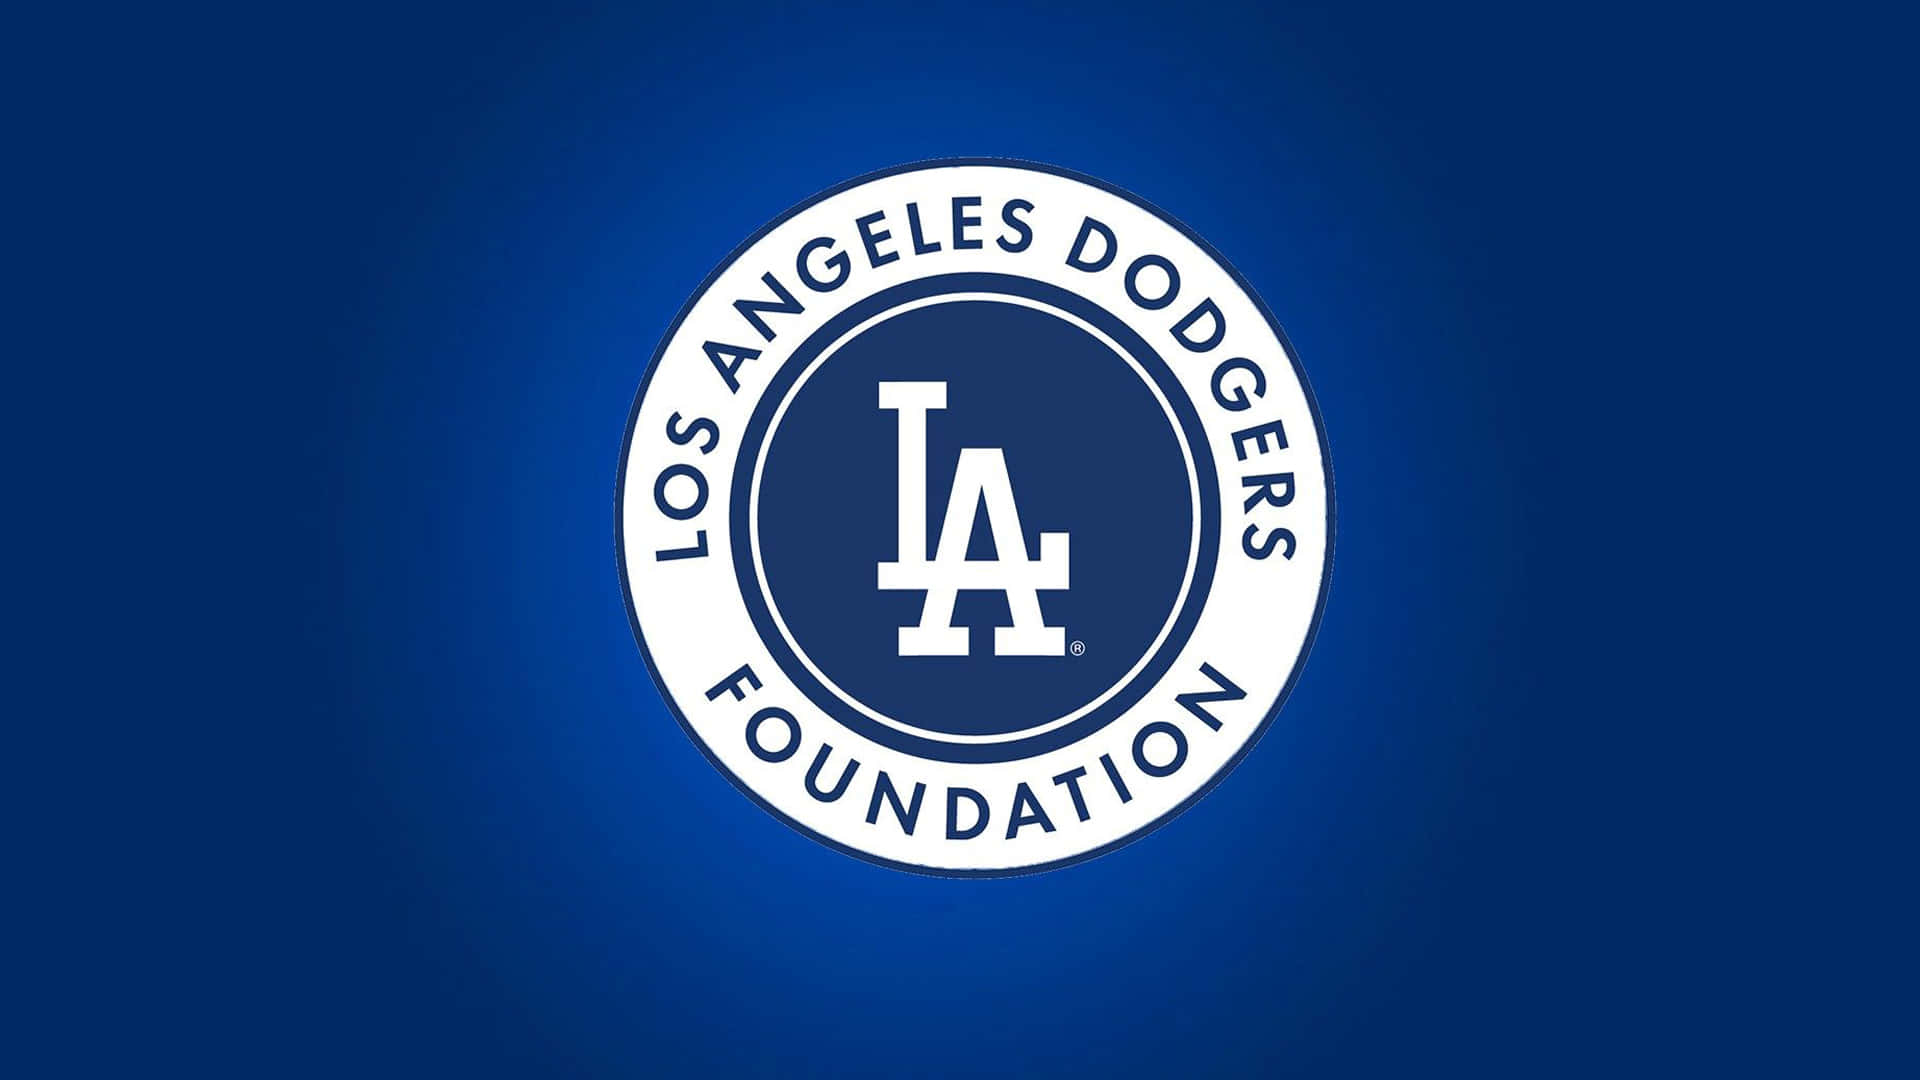 Los Angeles Dodgers Foundation Logo Wallpaper